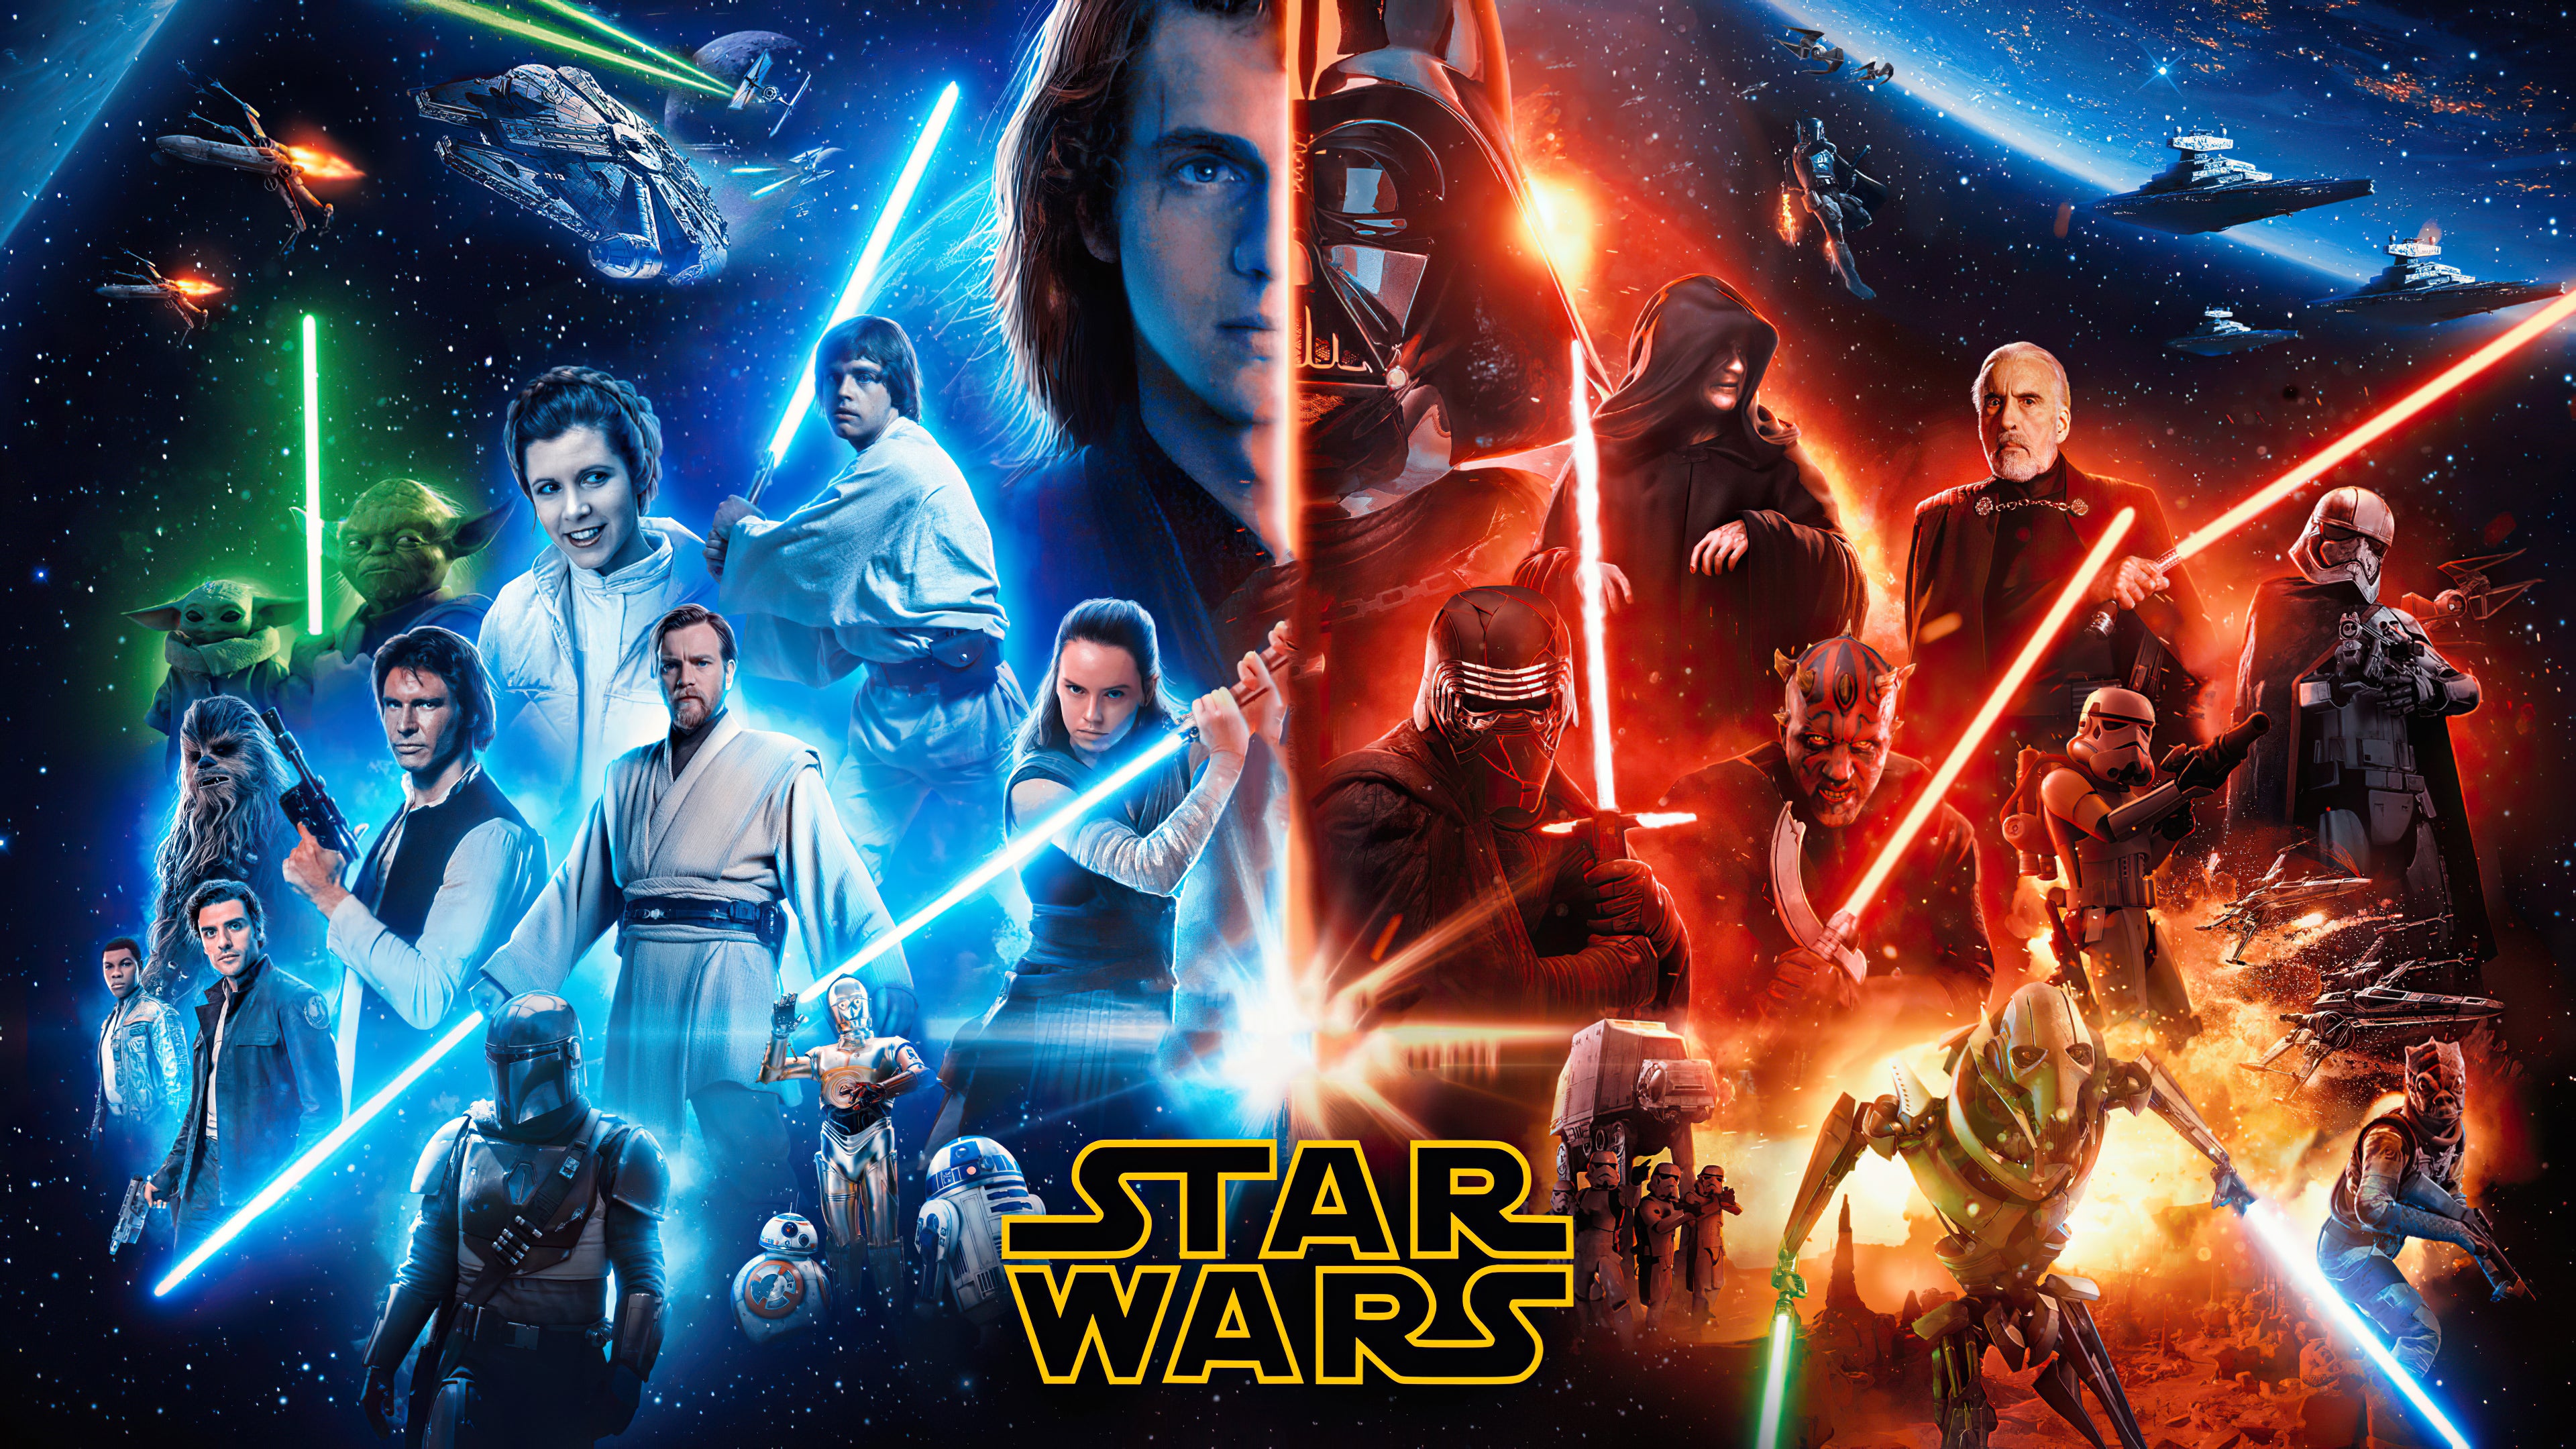 Obi Wan Kenobi HD Wallpaper, Background